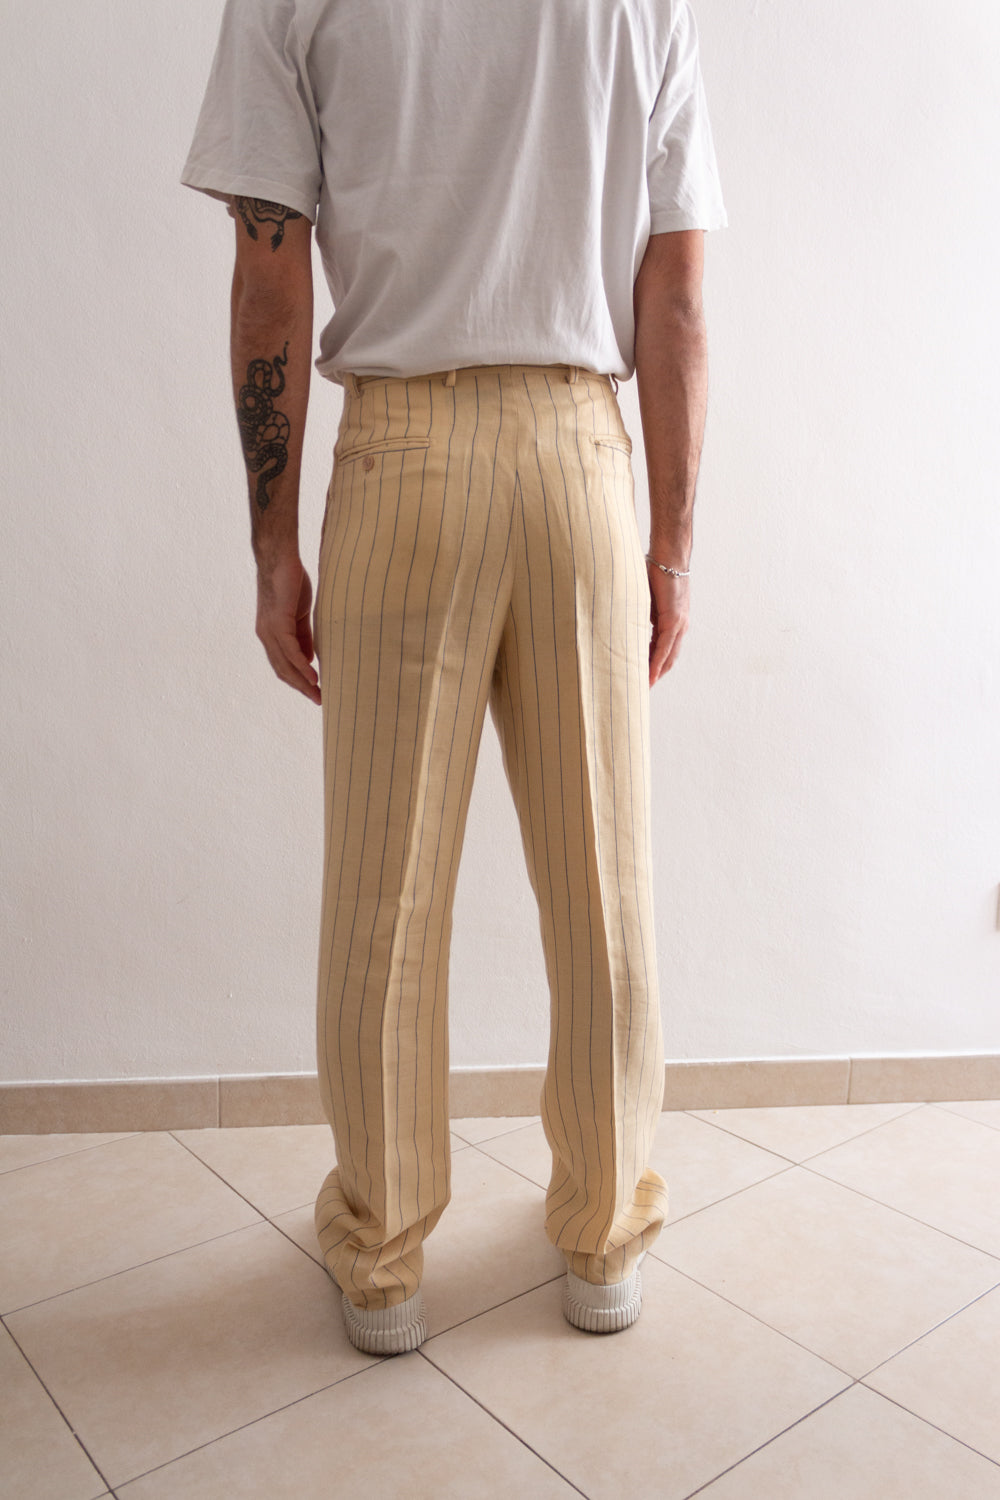 Pantaloni lana lino 48